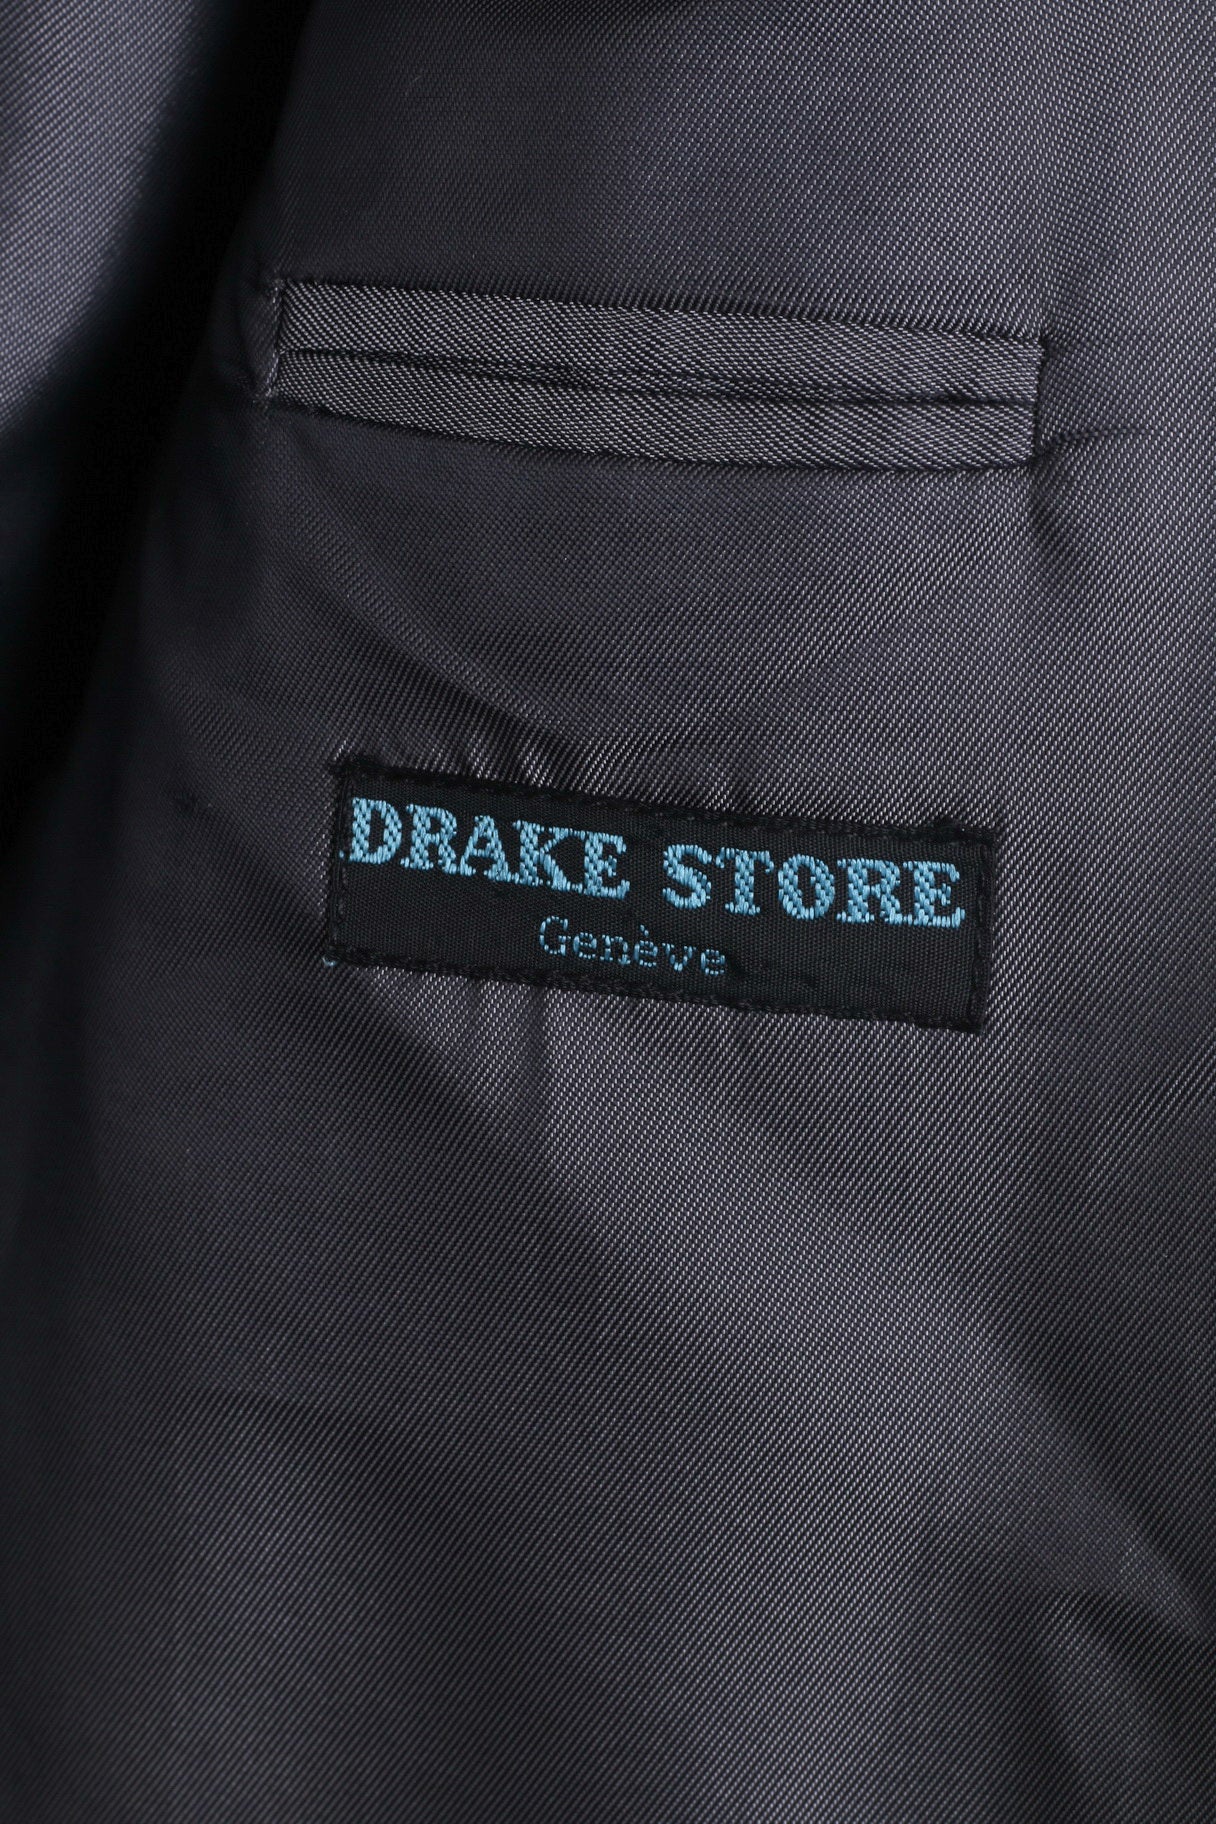 Cerruti 1881 Mens 98 M Blazer Charcoal Wool Single Breasted Jacket Drake Store